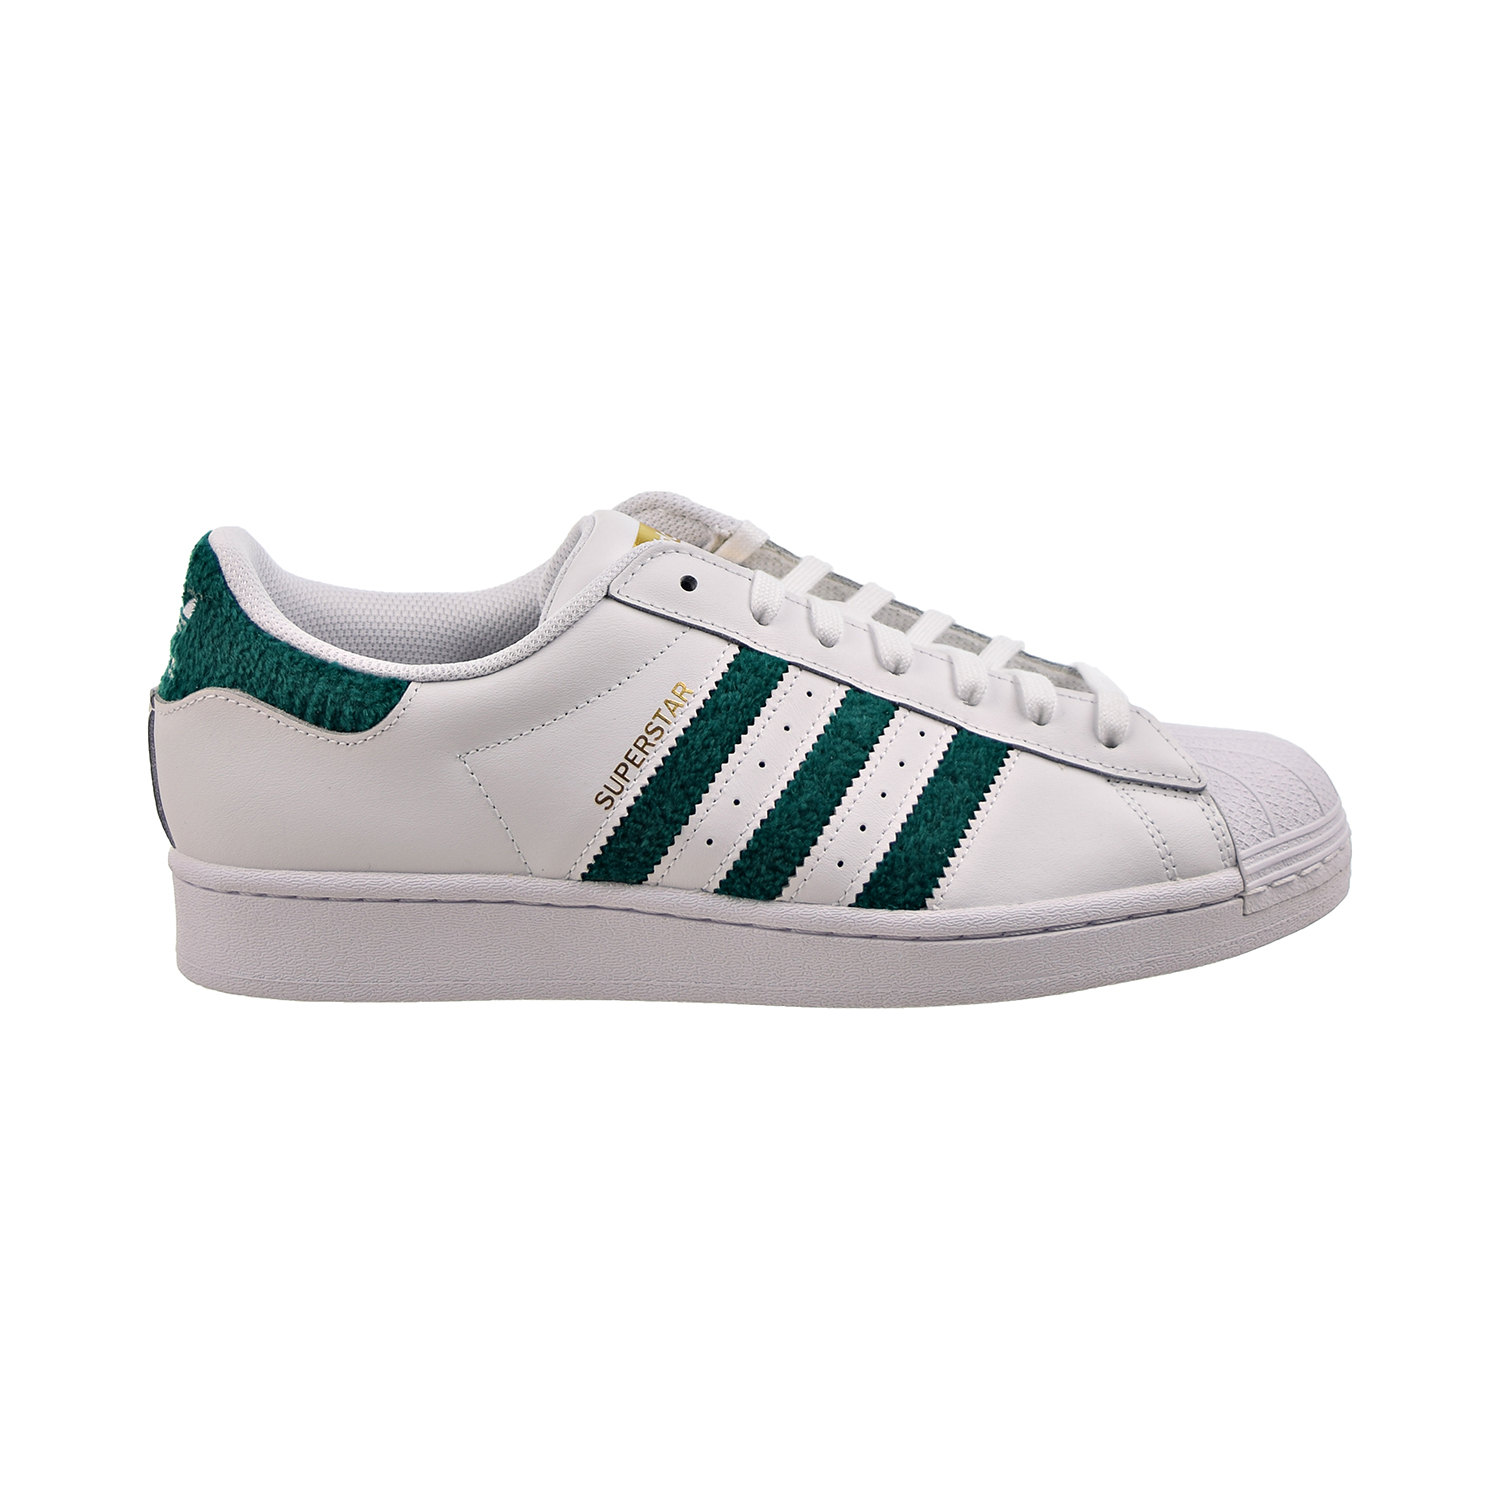 Adidas Superstar Men's Shoes Cloud White-Green-Metallic Gold h00190